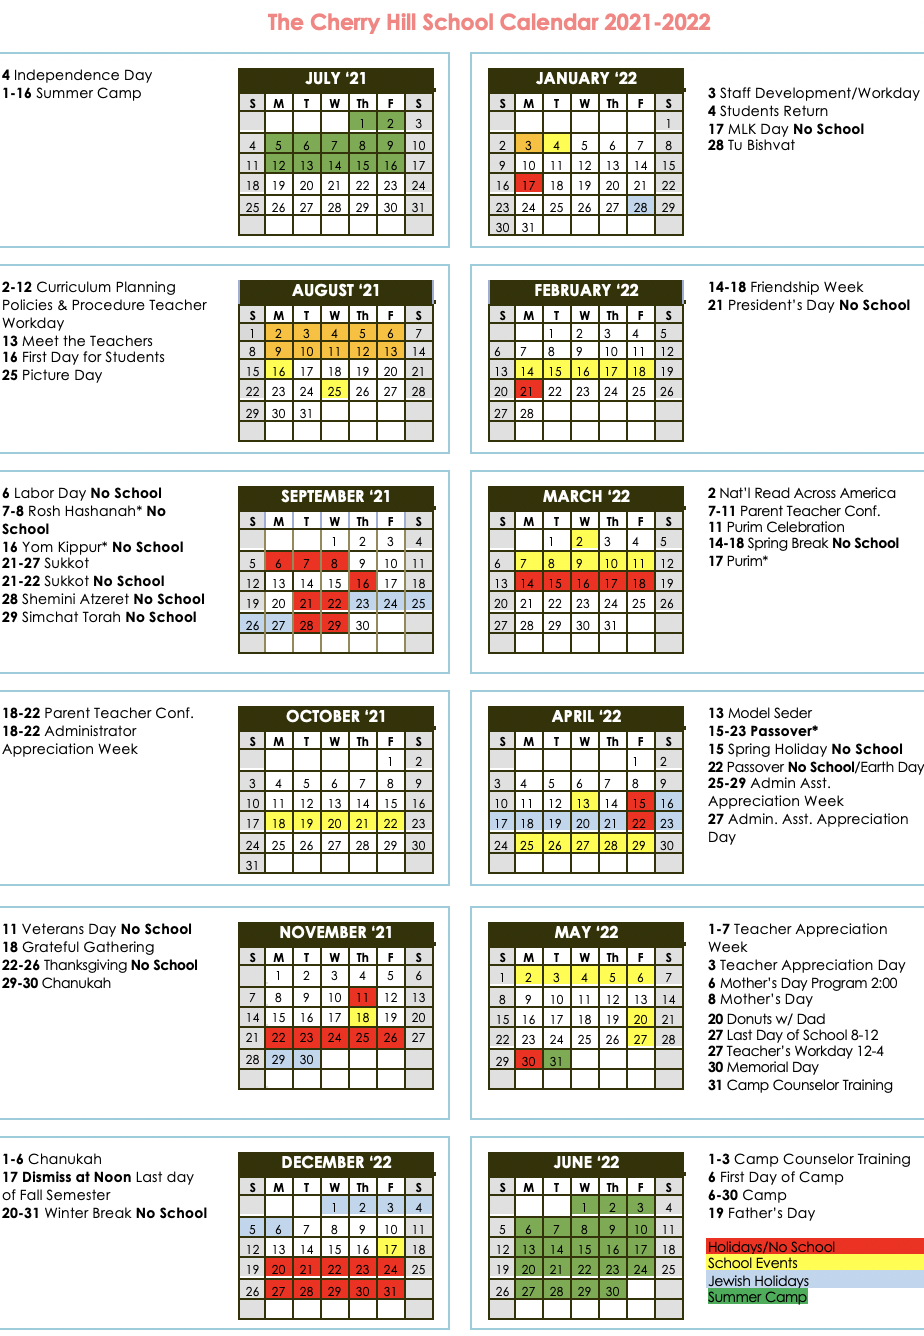 school-calendar-the-cherry-hill-school